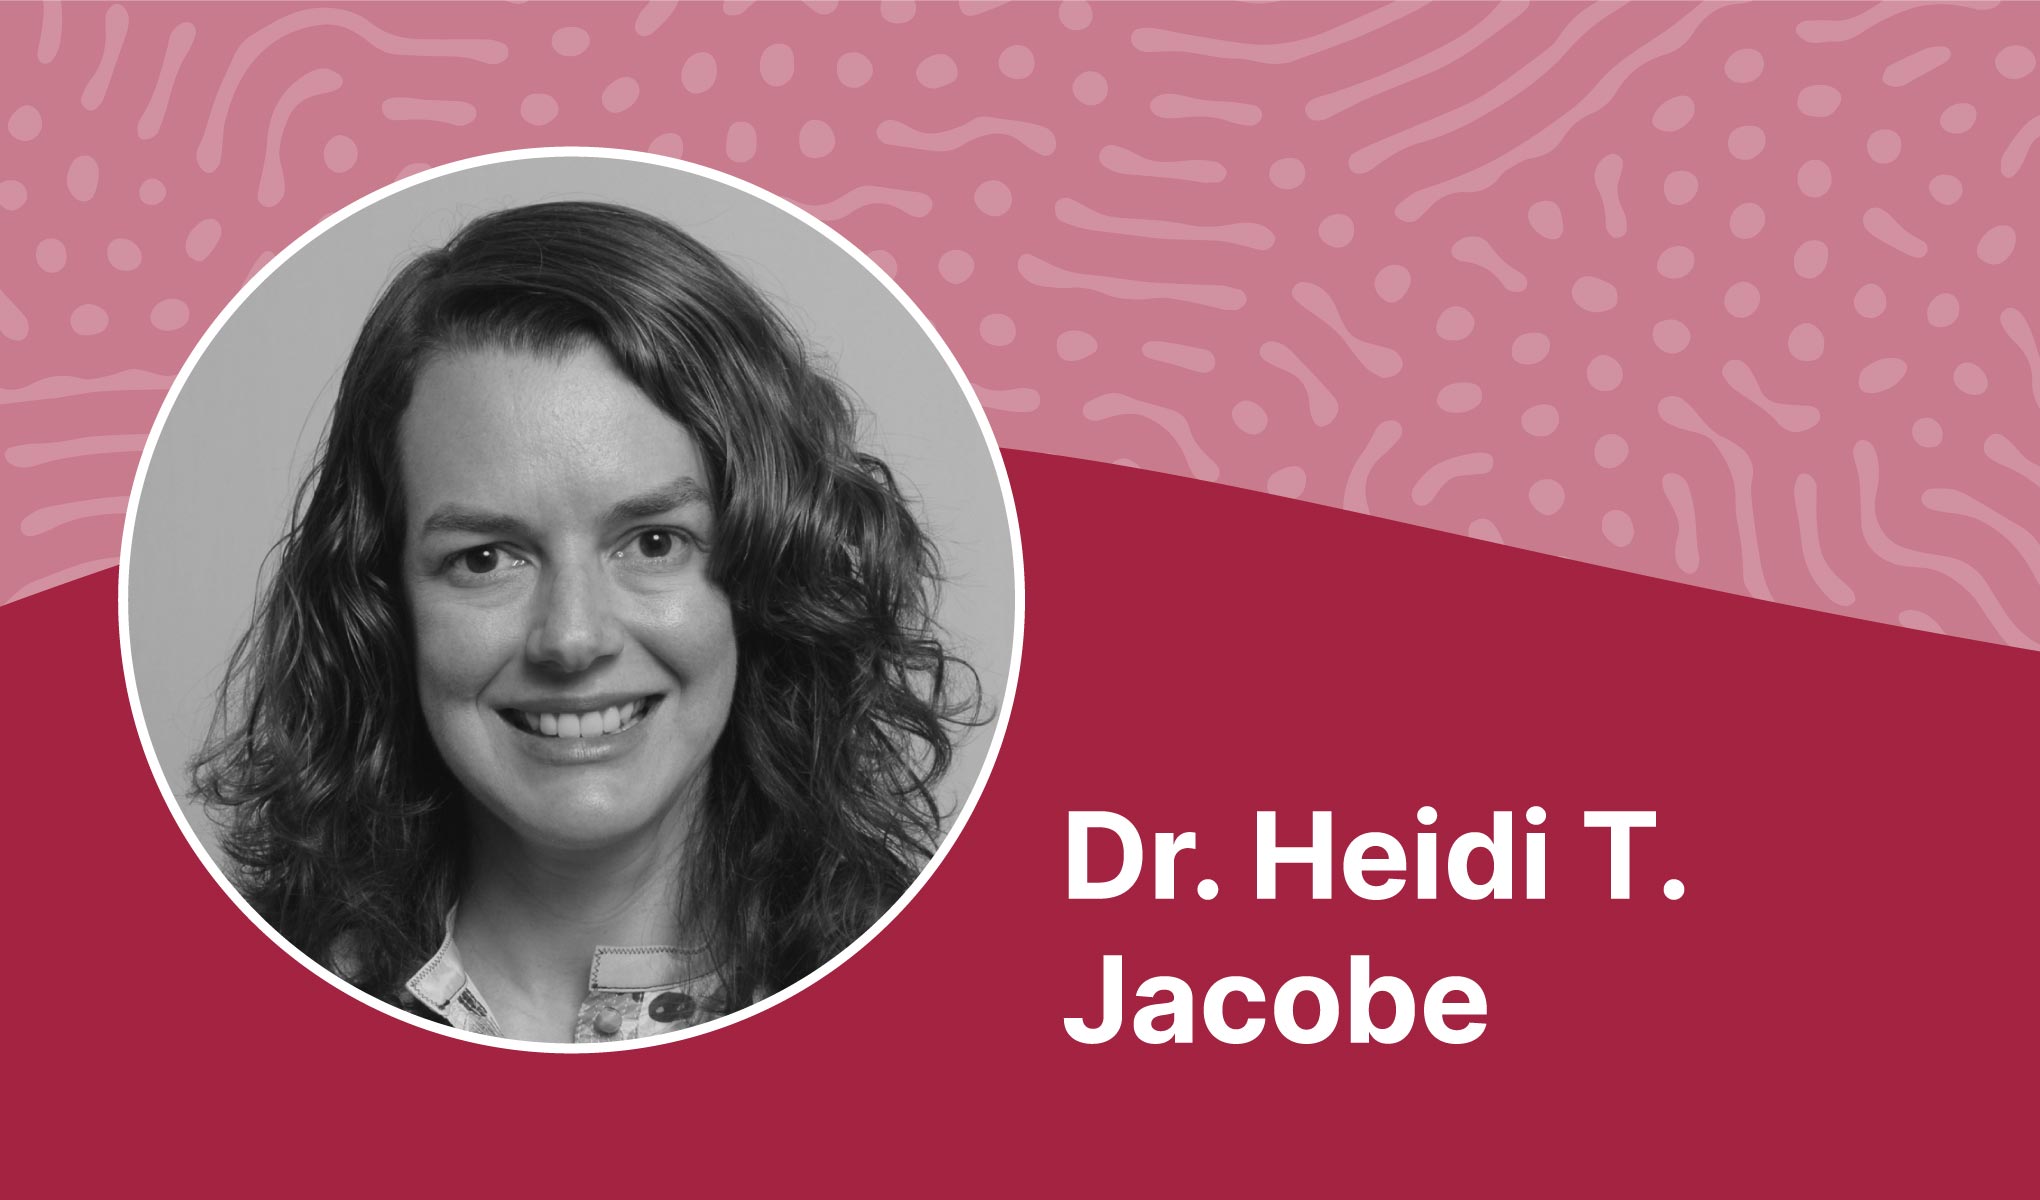 Dr. Heidi T. Jacobe